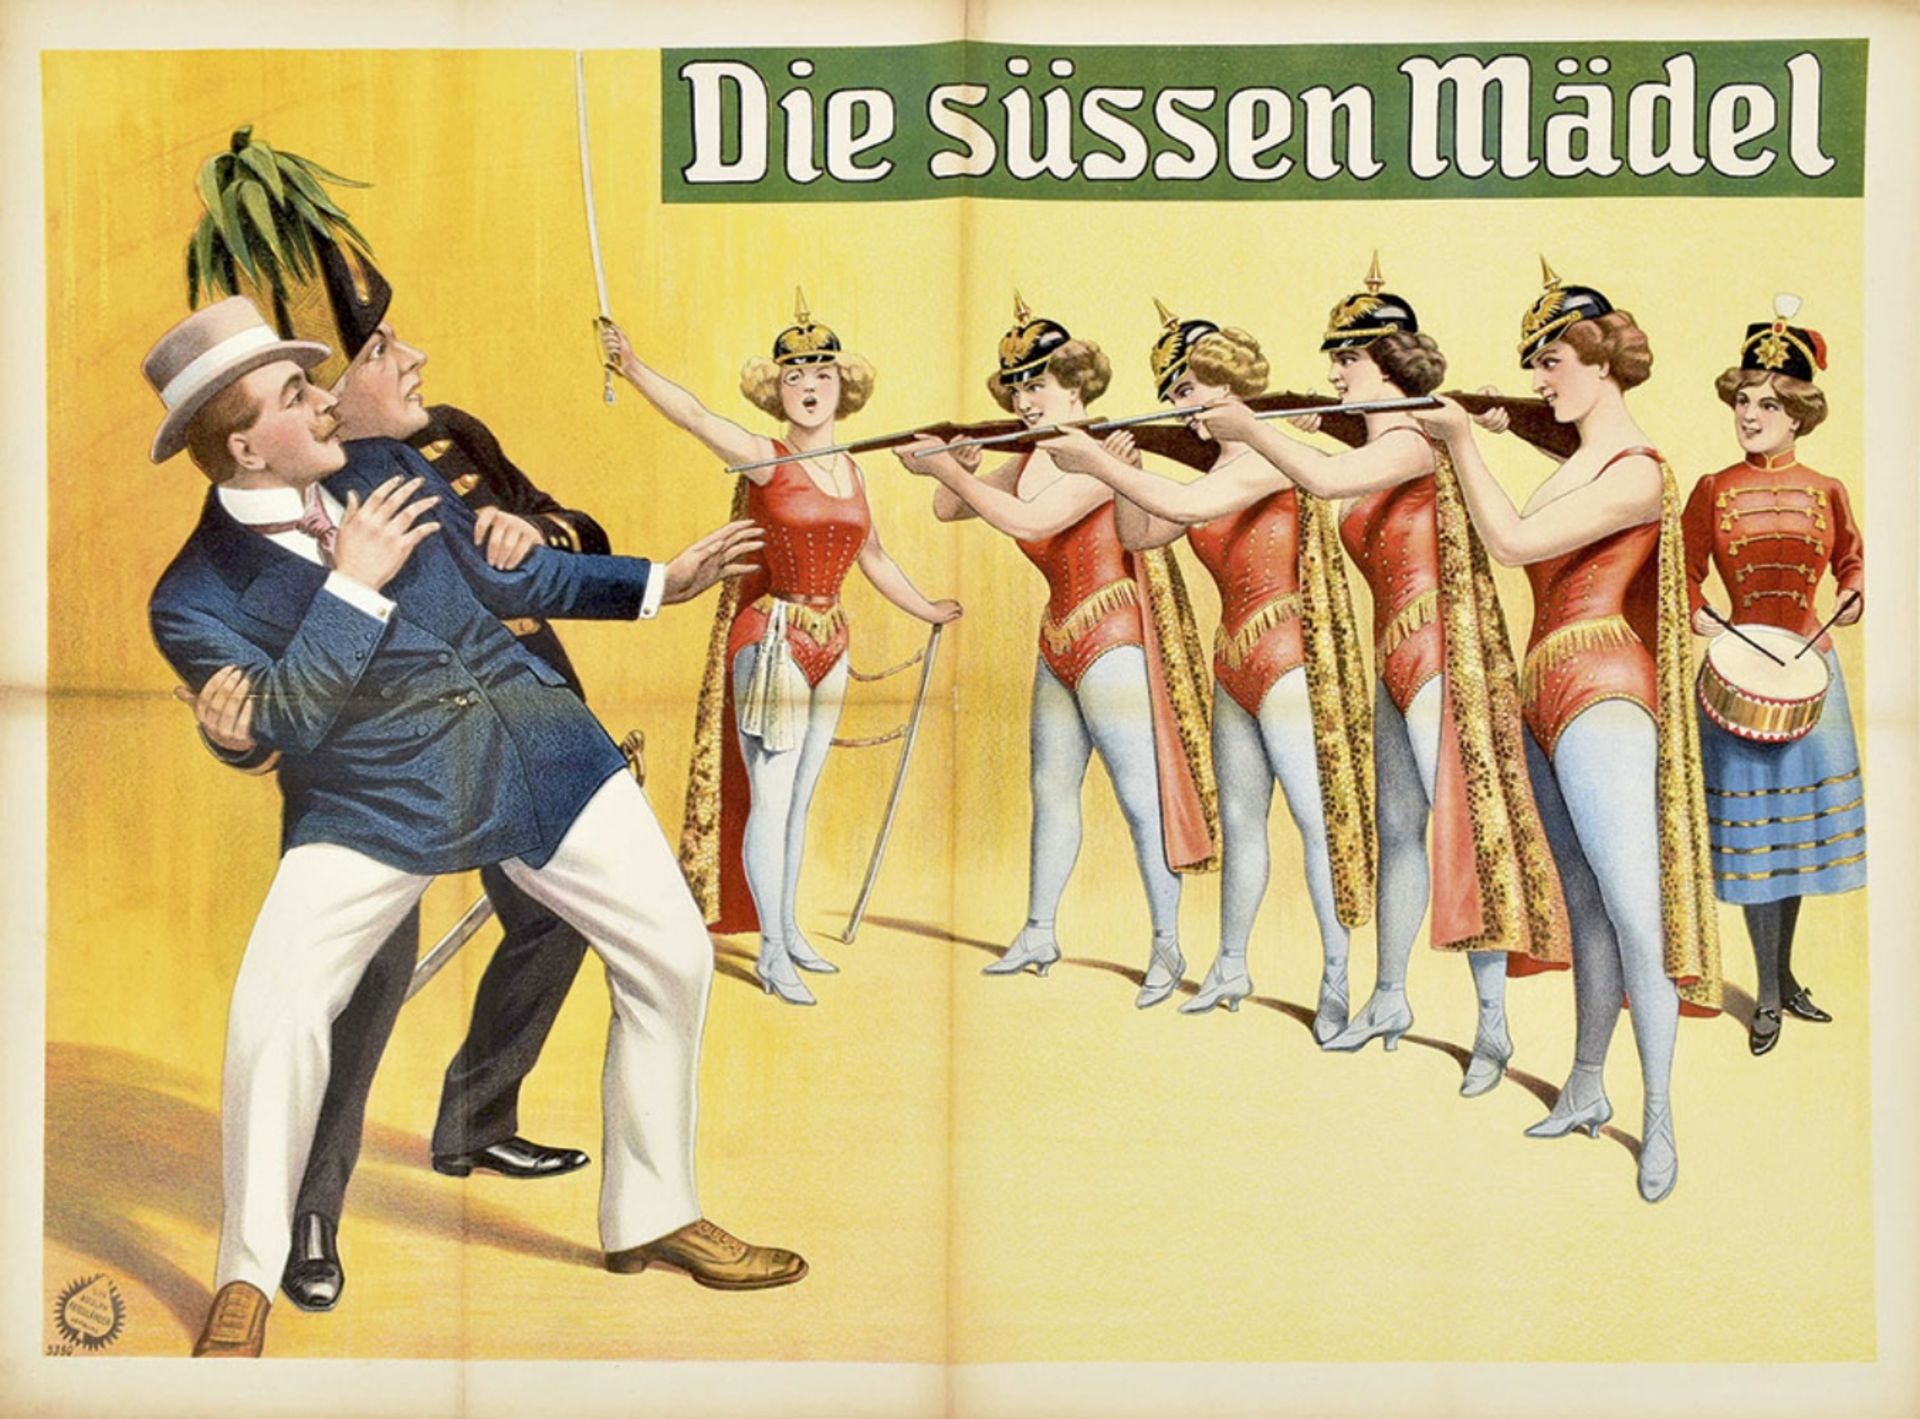 [War Theatre] Die Süssen Mädel - Image 8 of 8